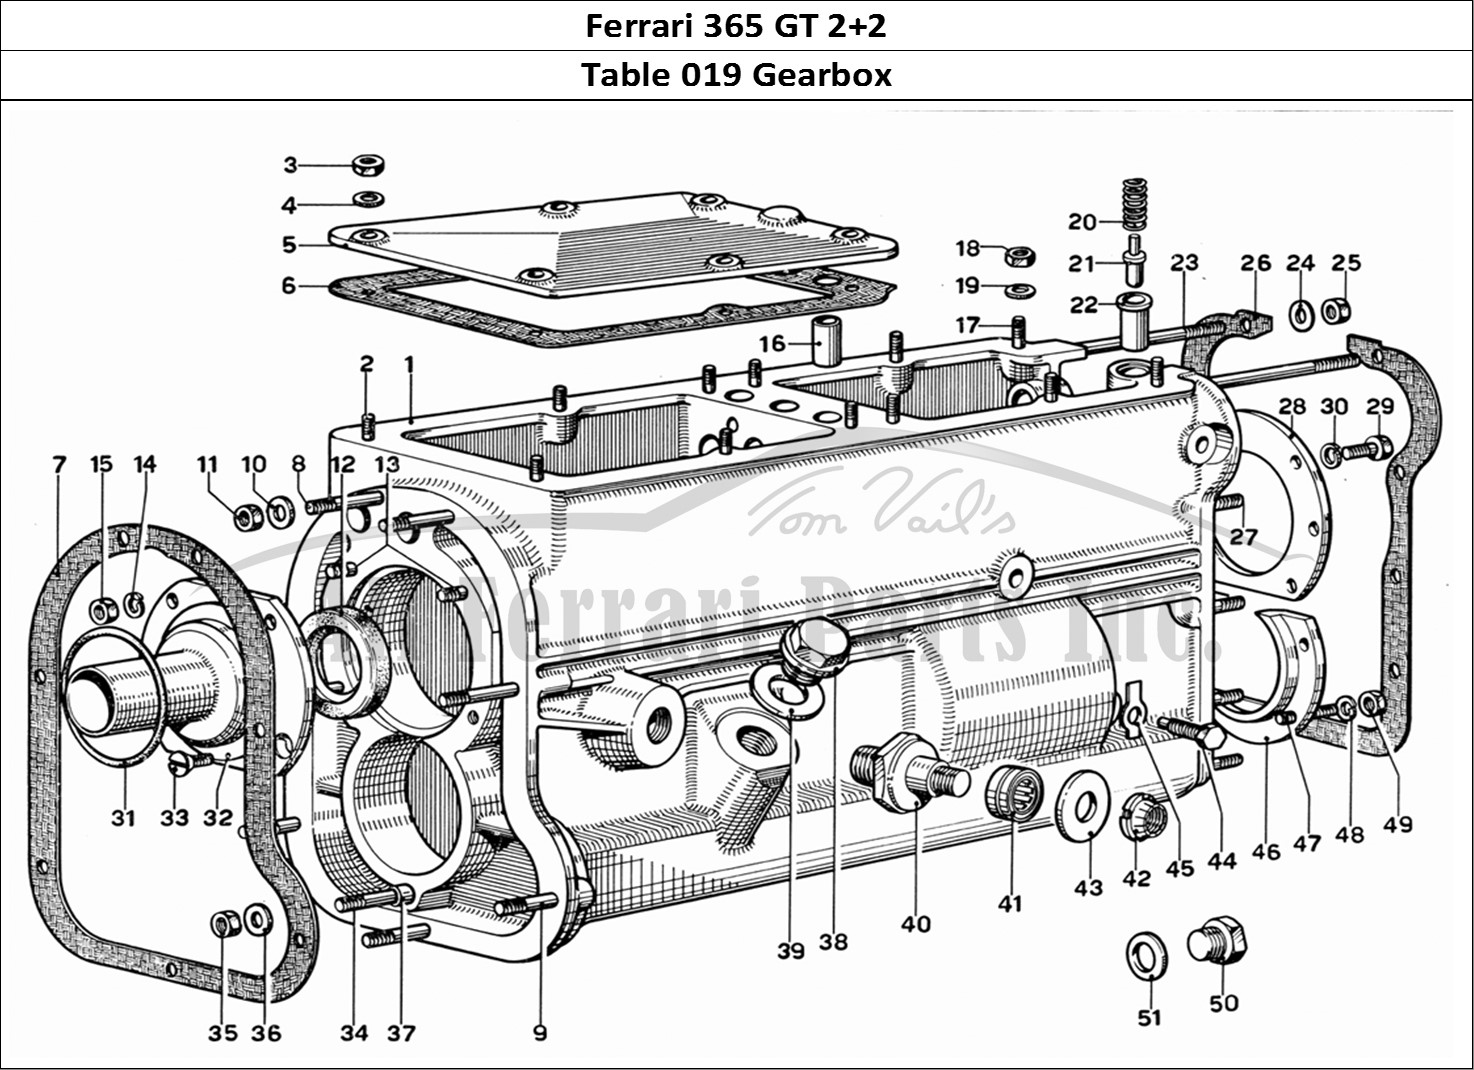 Ferrari Parts Ferrari 365 GT 2+2 (Mechanical) Page 019 Gear Box